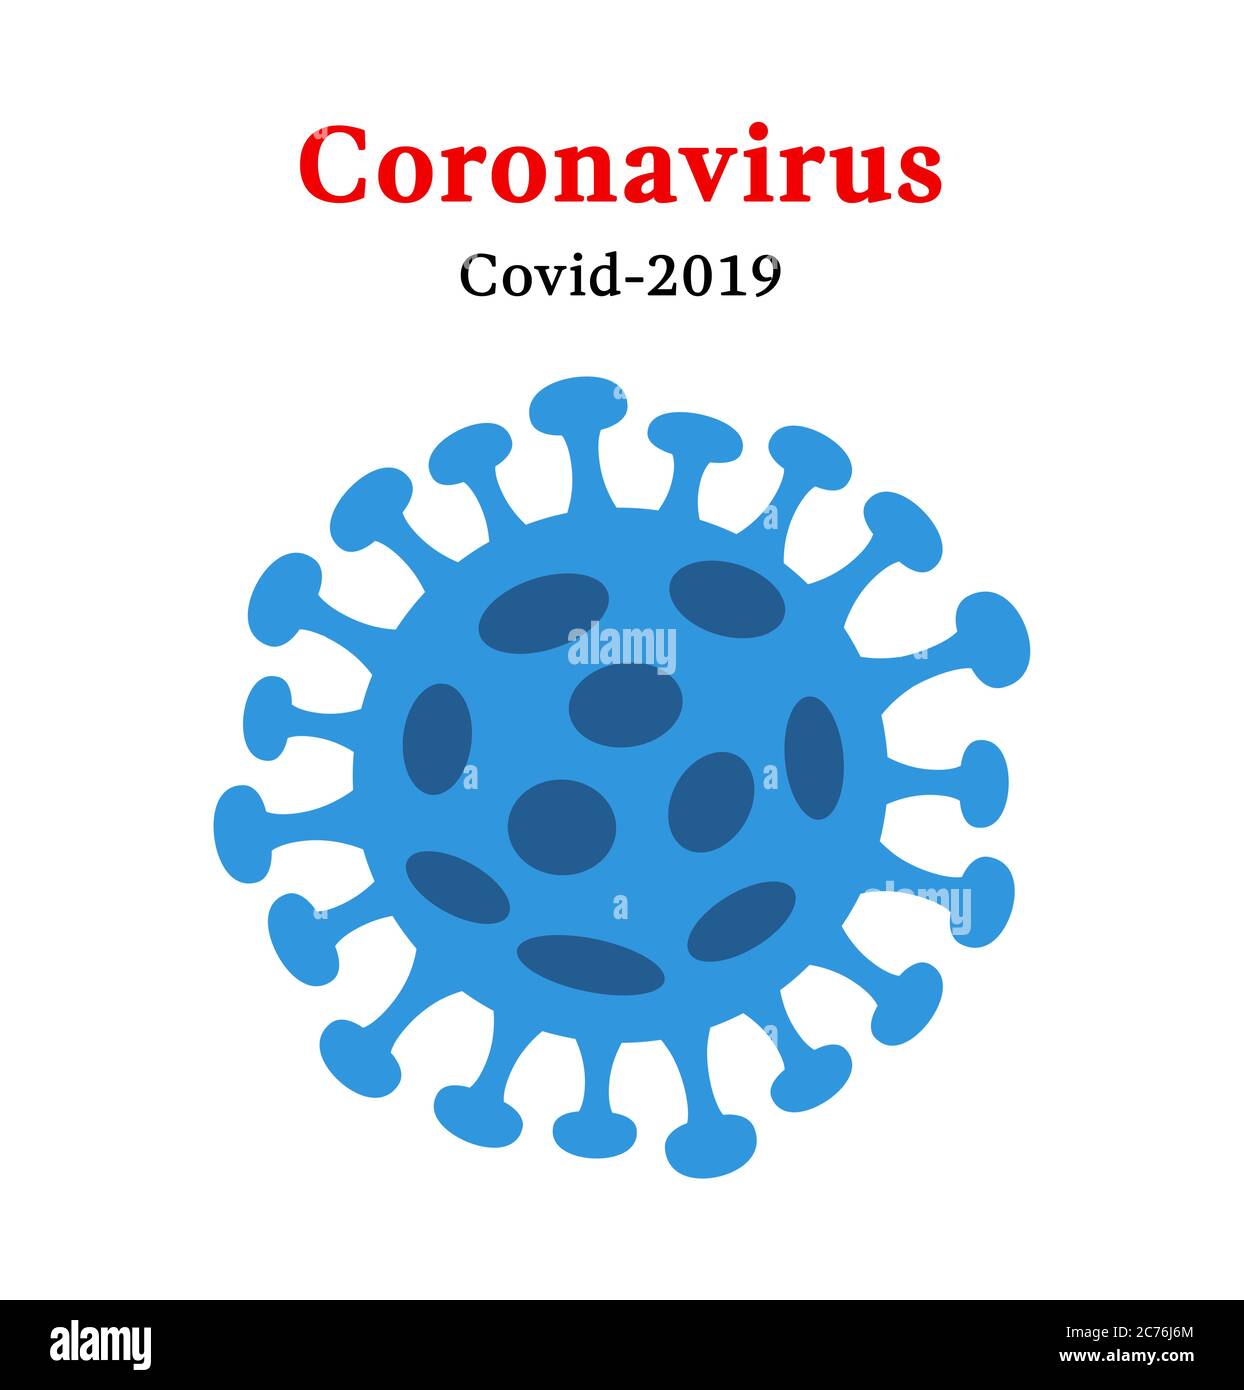 Abstract virus strain model Novel coronavirus 2019-nCoV. The danger of coronavirus and the risk to public health. Pandemic medical concept with danger Stock Photo